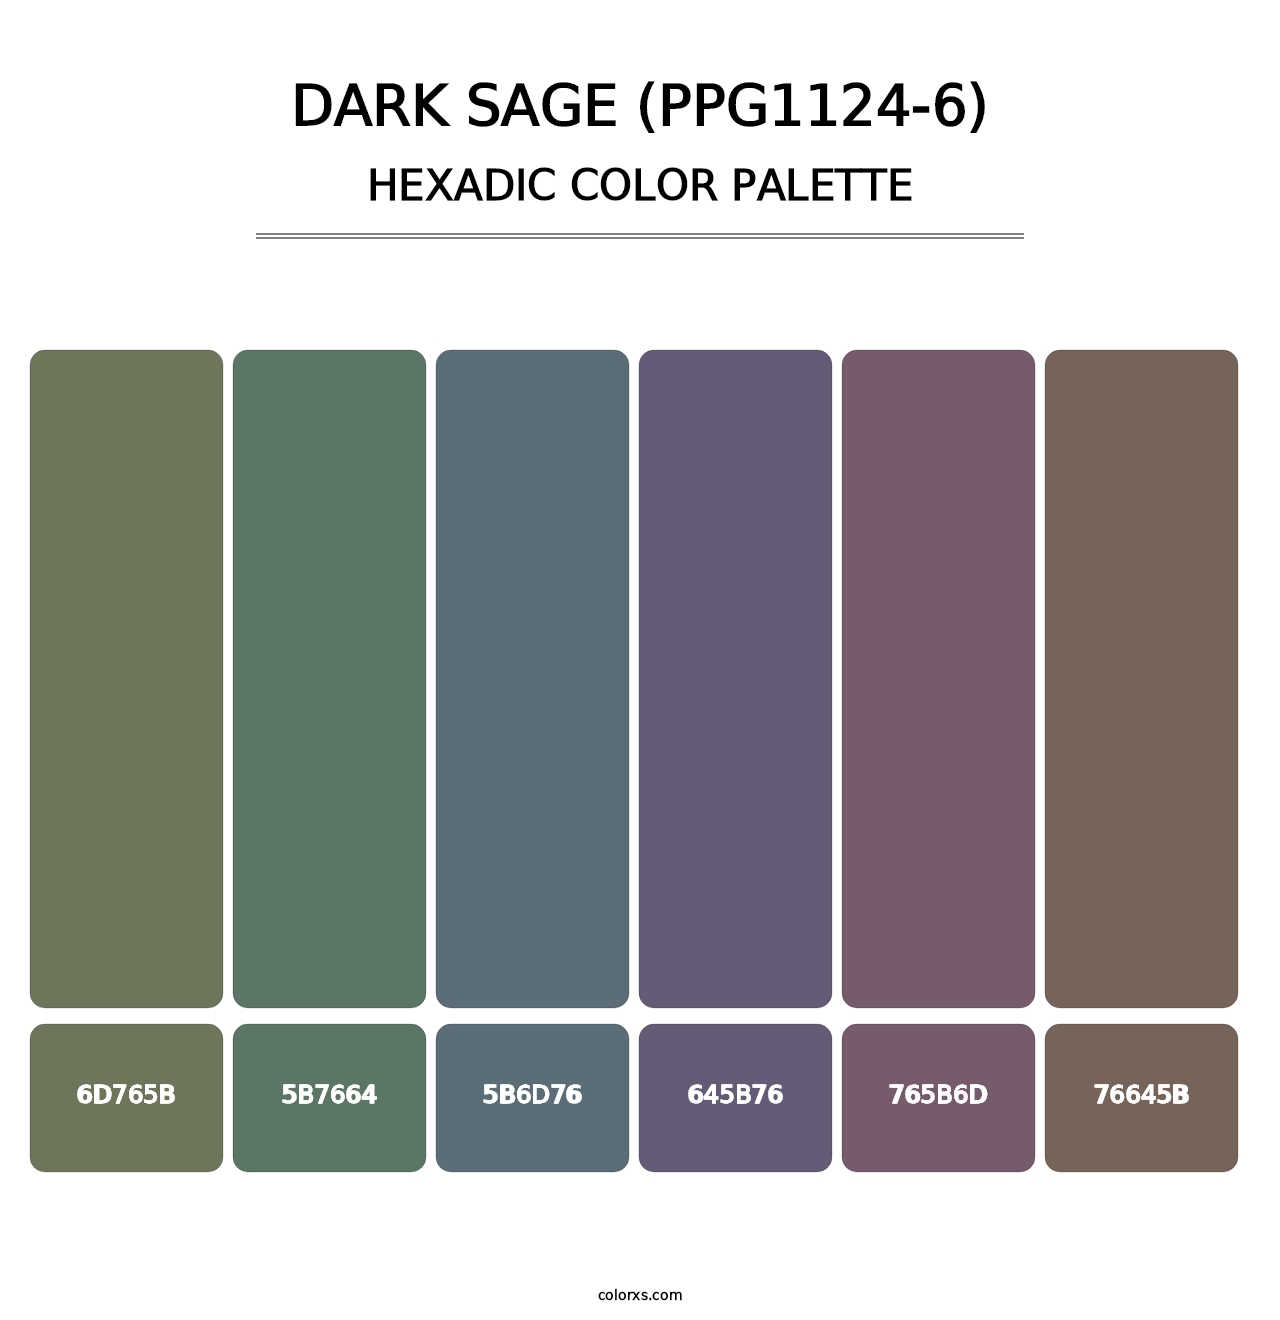 Dark Sage (PPG1124-6) - Hexadic Color Palette